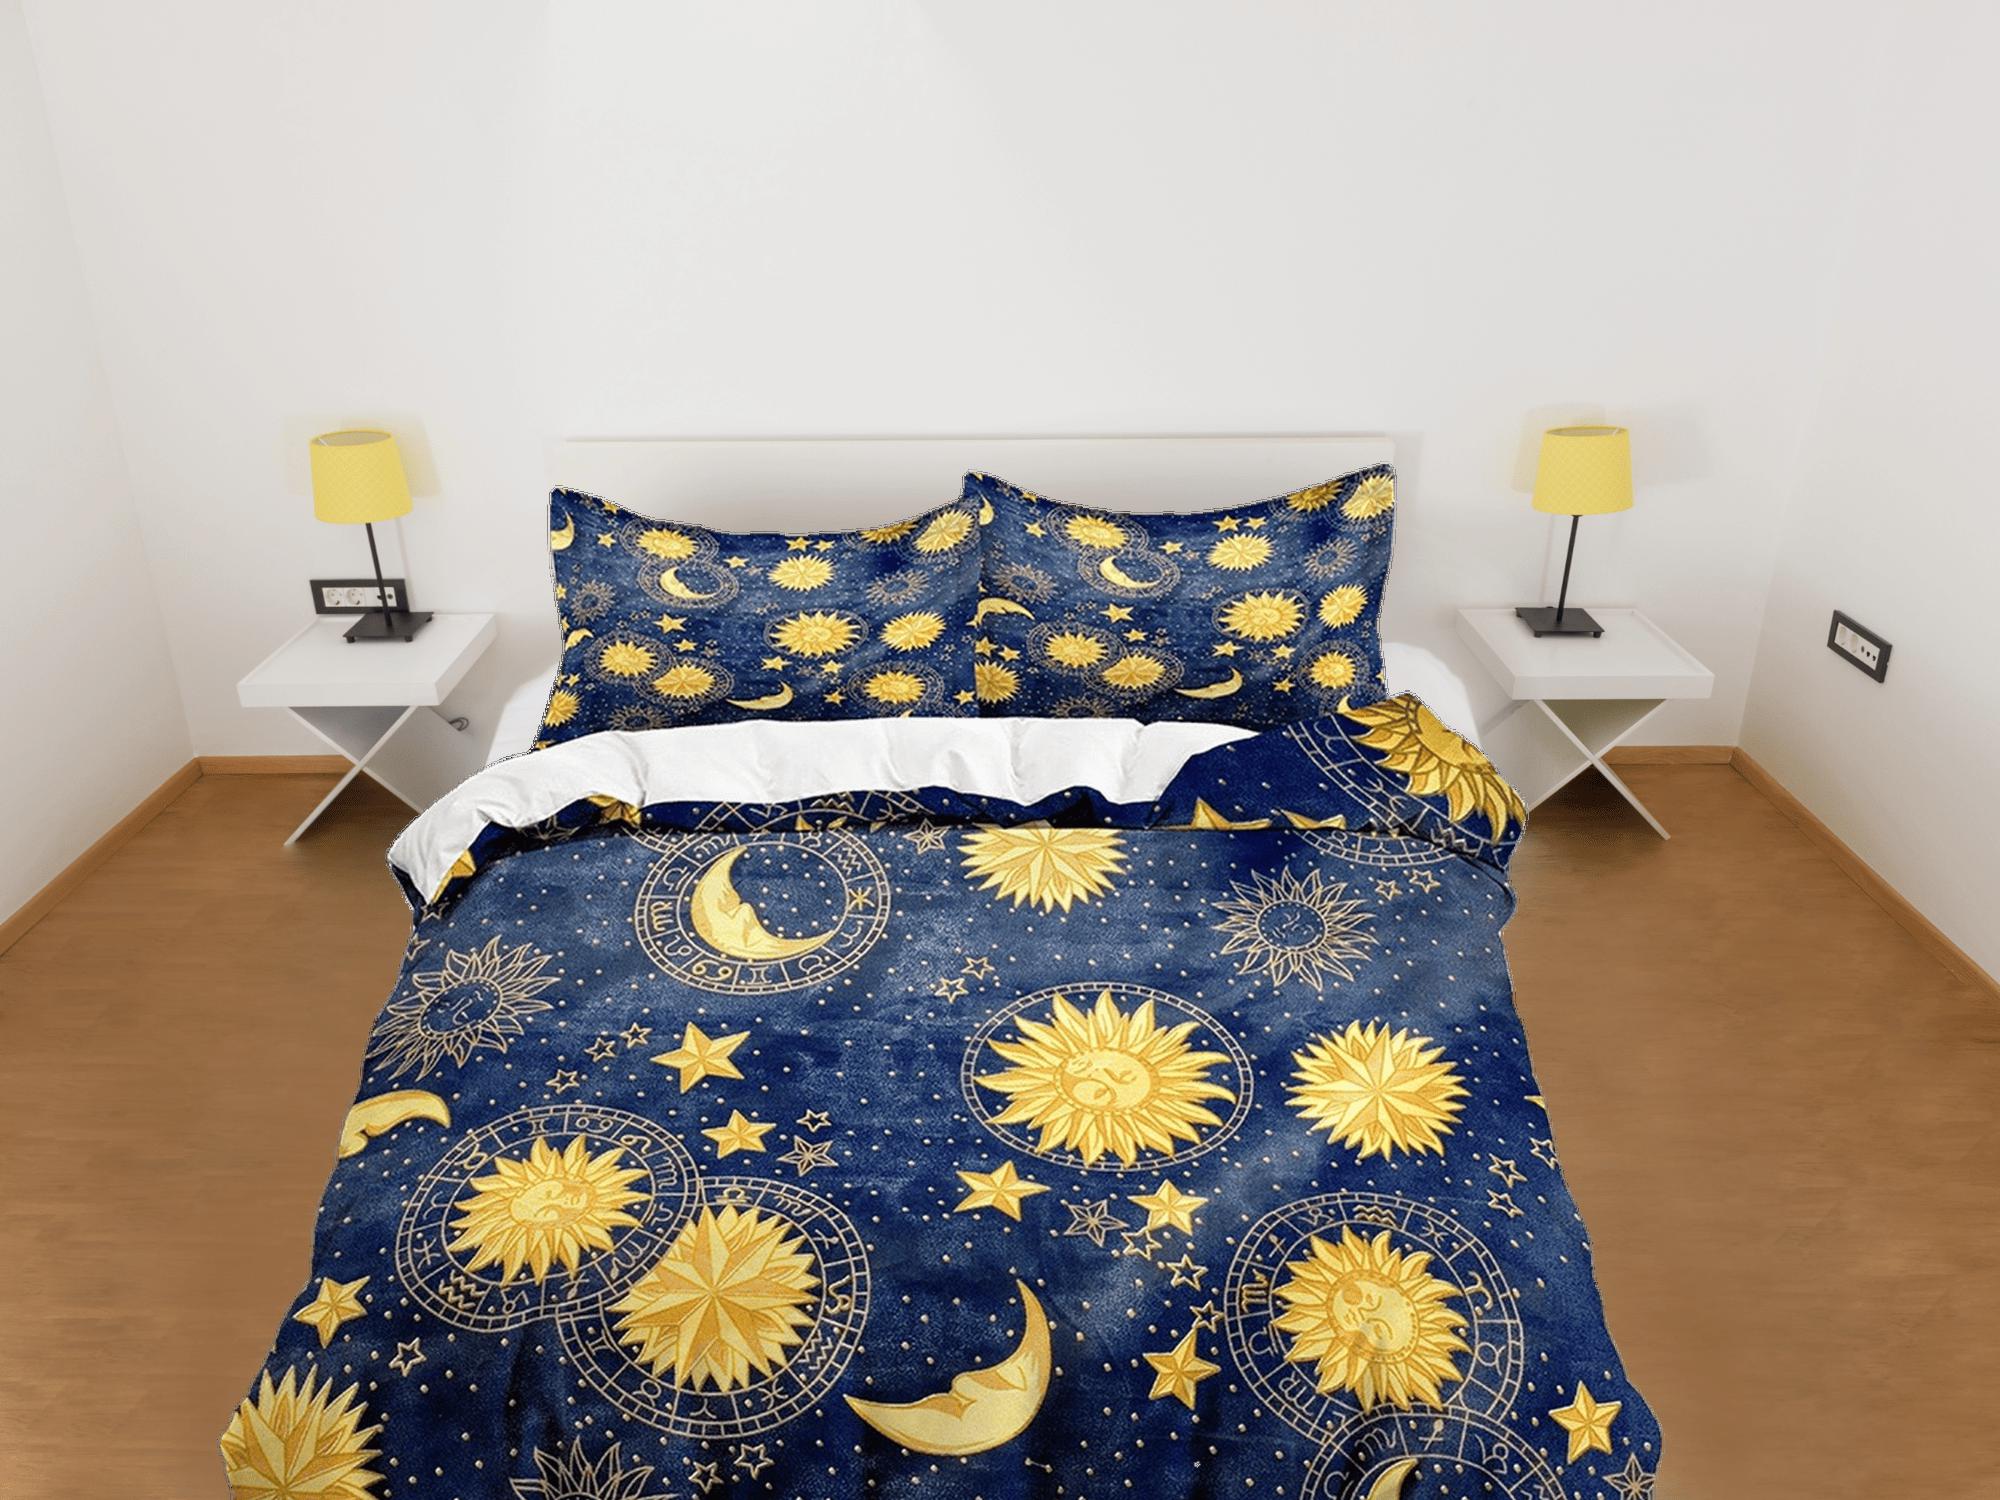 daintyduvet Celestial bedding blue sky sun and moon, witchy decor dorm bedding, aesthetic duvet cover, boho bedding set full king queen, astrology gifts